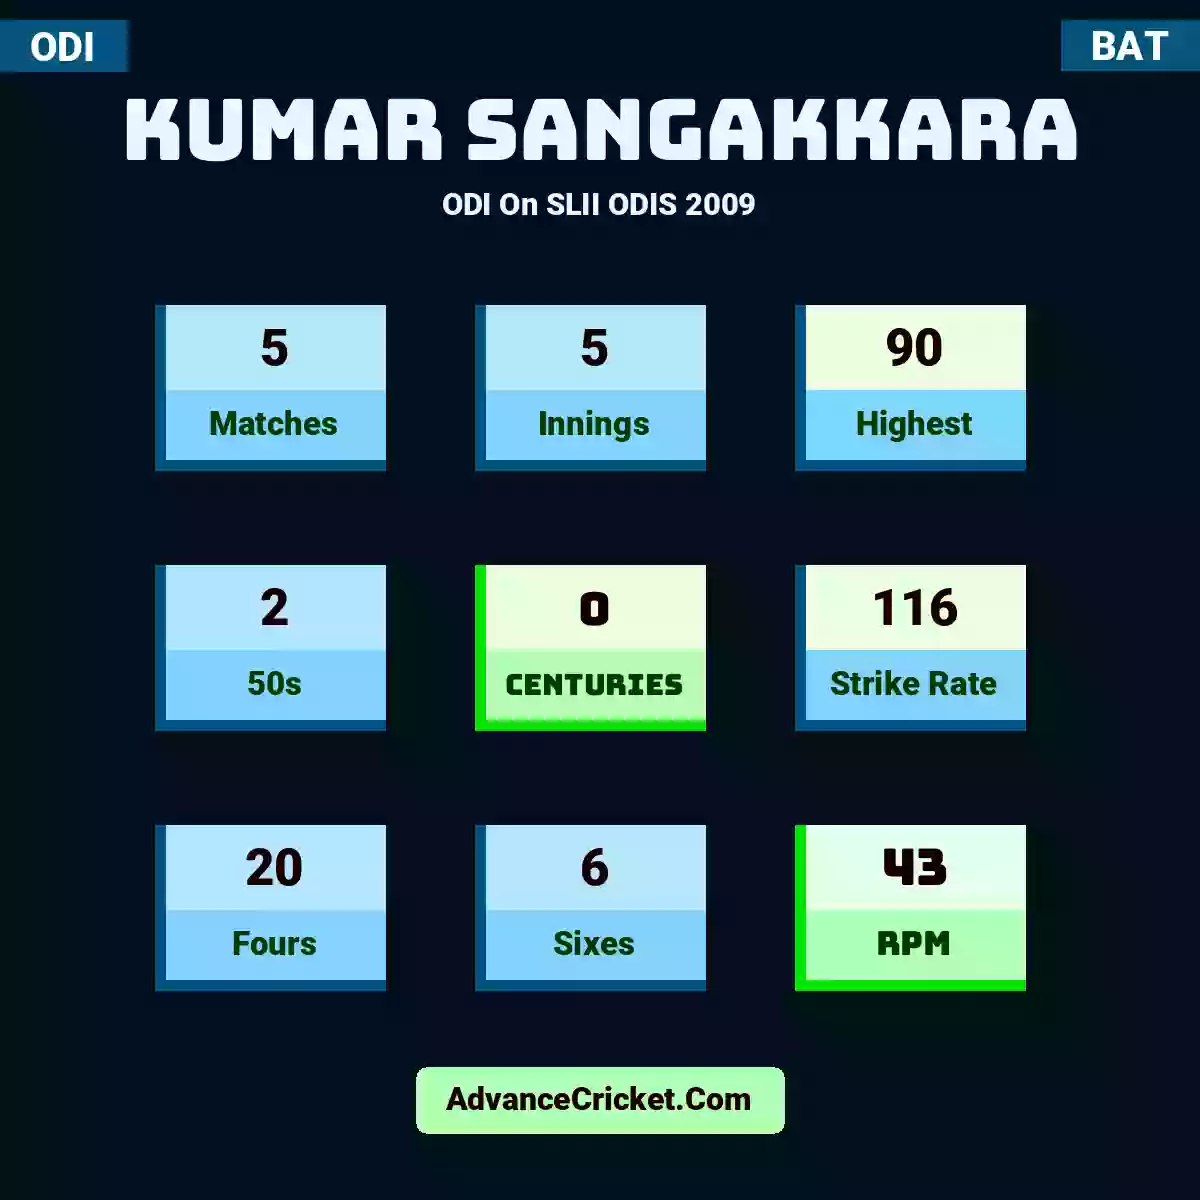 Kumar Sangakkara ODI  On SLII ODIS 2009, Kumar Sangakkara played 5 matches, scored 90 runs as highest, 2 half-centuries, and 0 centuries, with a strike rate of 116. K.Sangakkara hit 20 fours and 6 sixes, with an RPM of 43.